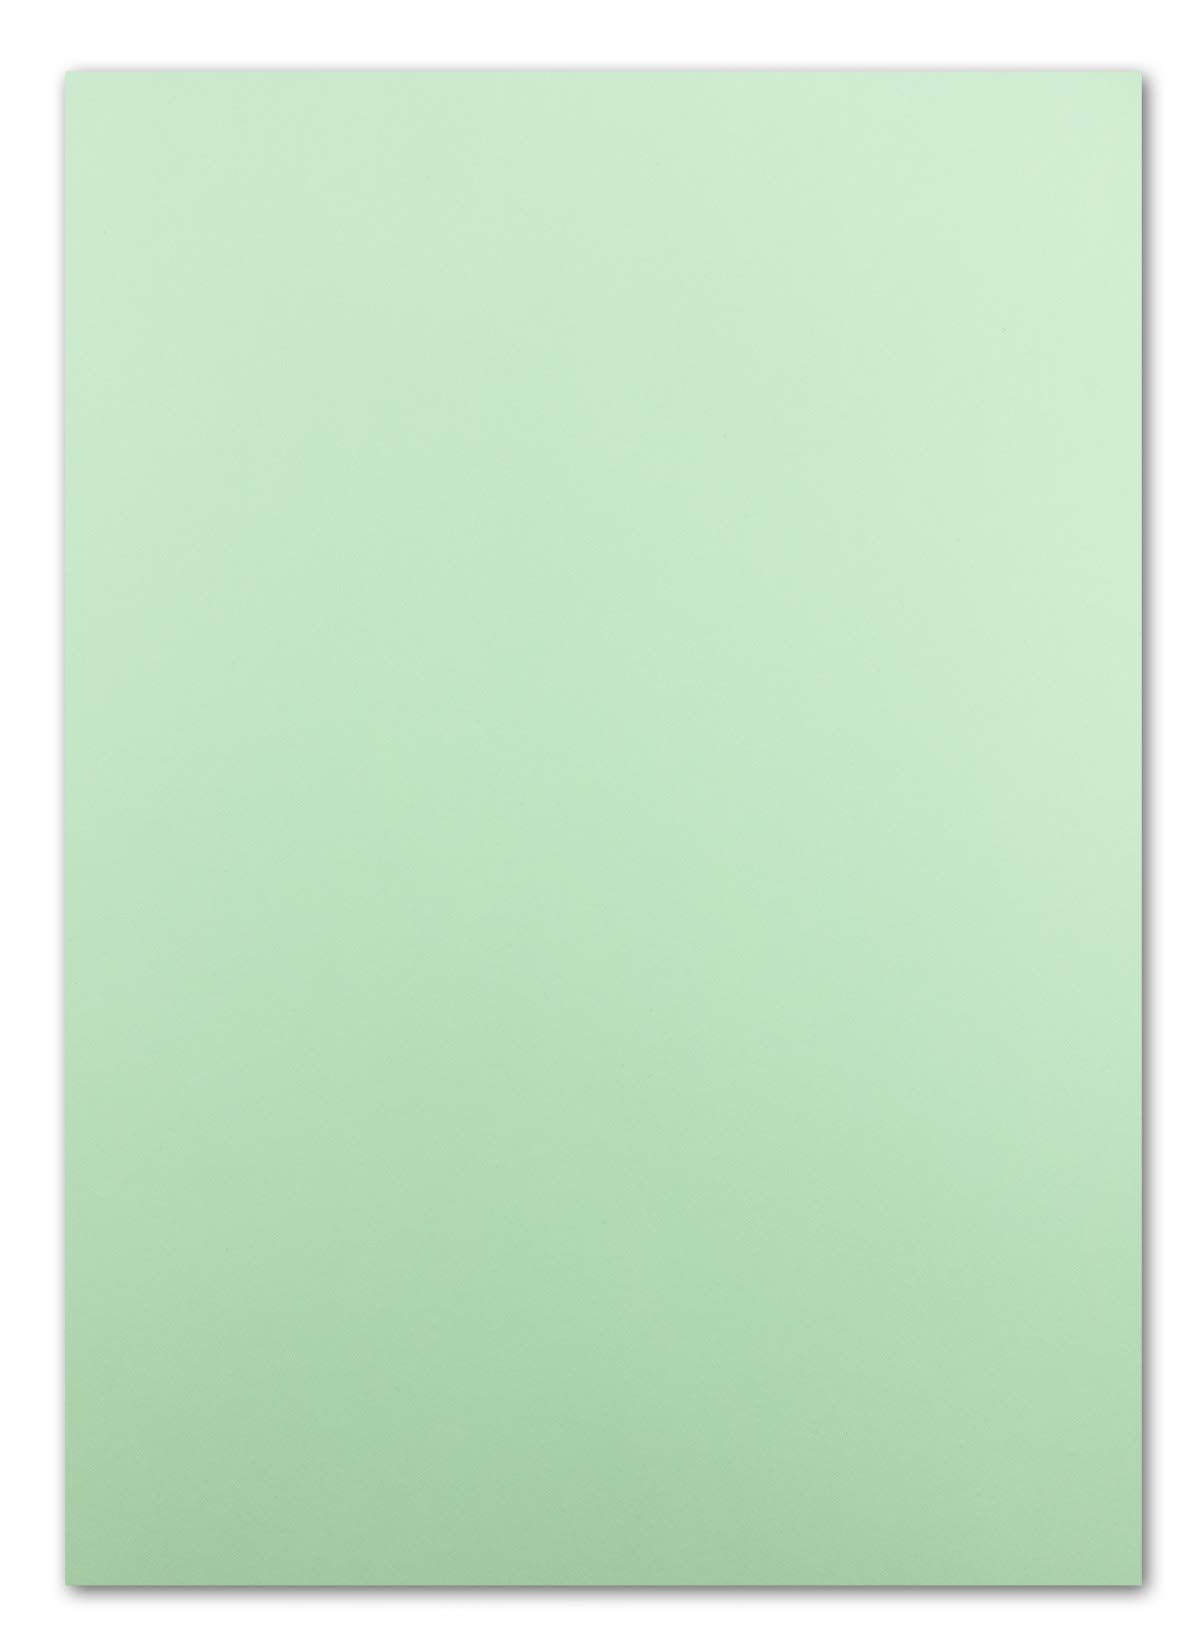 150x DIN A4 Papier - Mintgrün (Grün) - 110 g/m² - 21 x 29,7 cm - Ton-Papier Fotokarton Bastel-Papier Ton-Karton - FarbenFroh